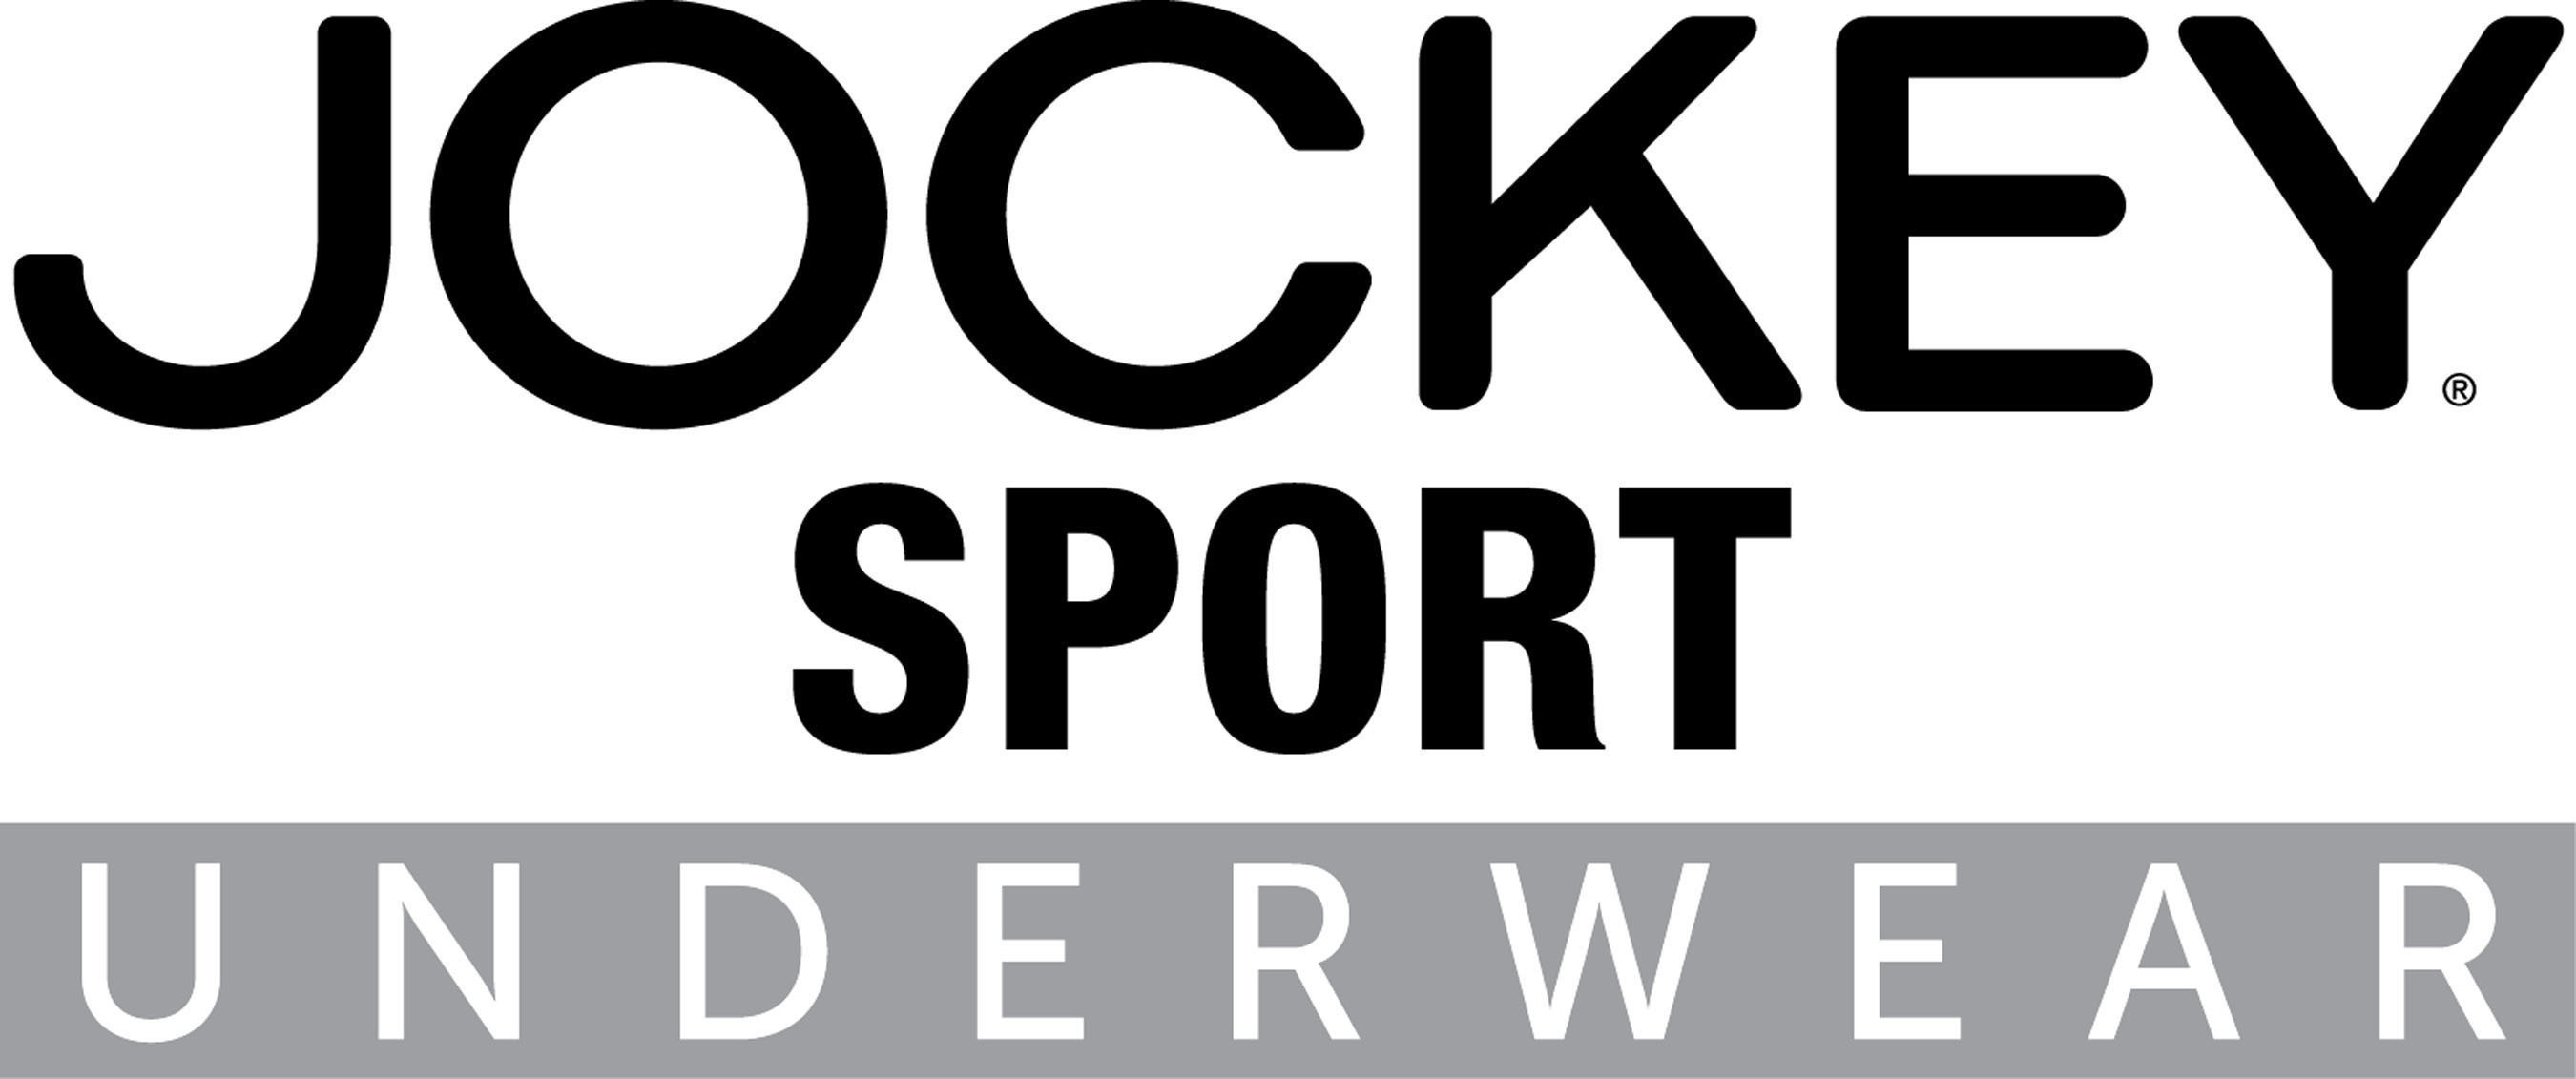 Jockey Sport. (PRNewsFoto/Jockey International, Inc.) (PRNewsFoto/JOCKEY INTERNATIONAL, INC.)